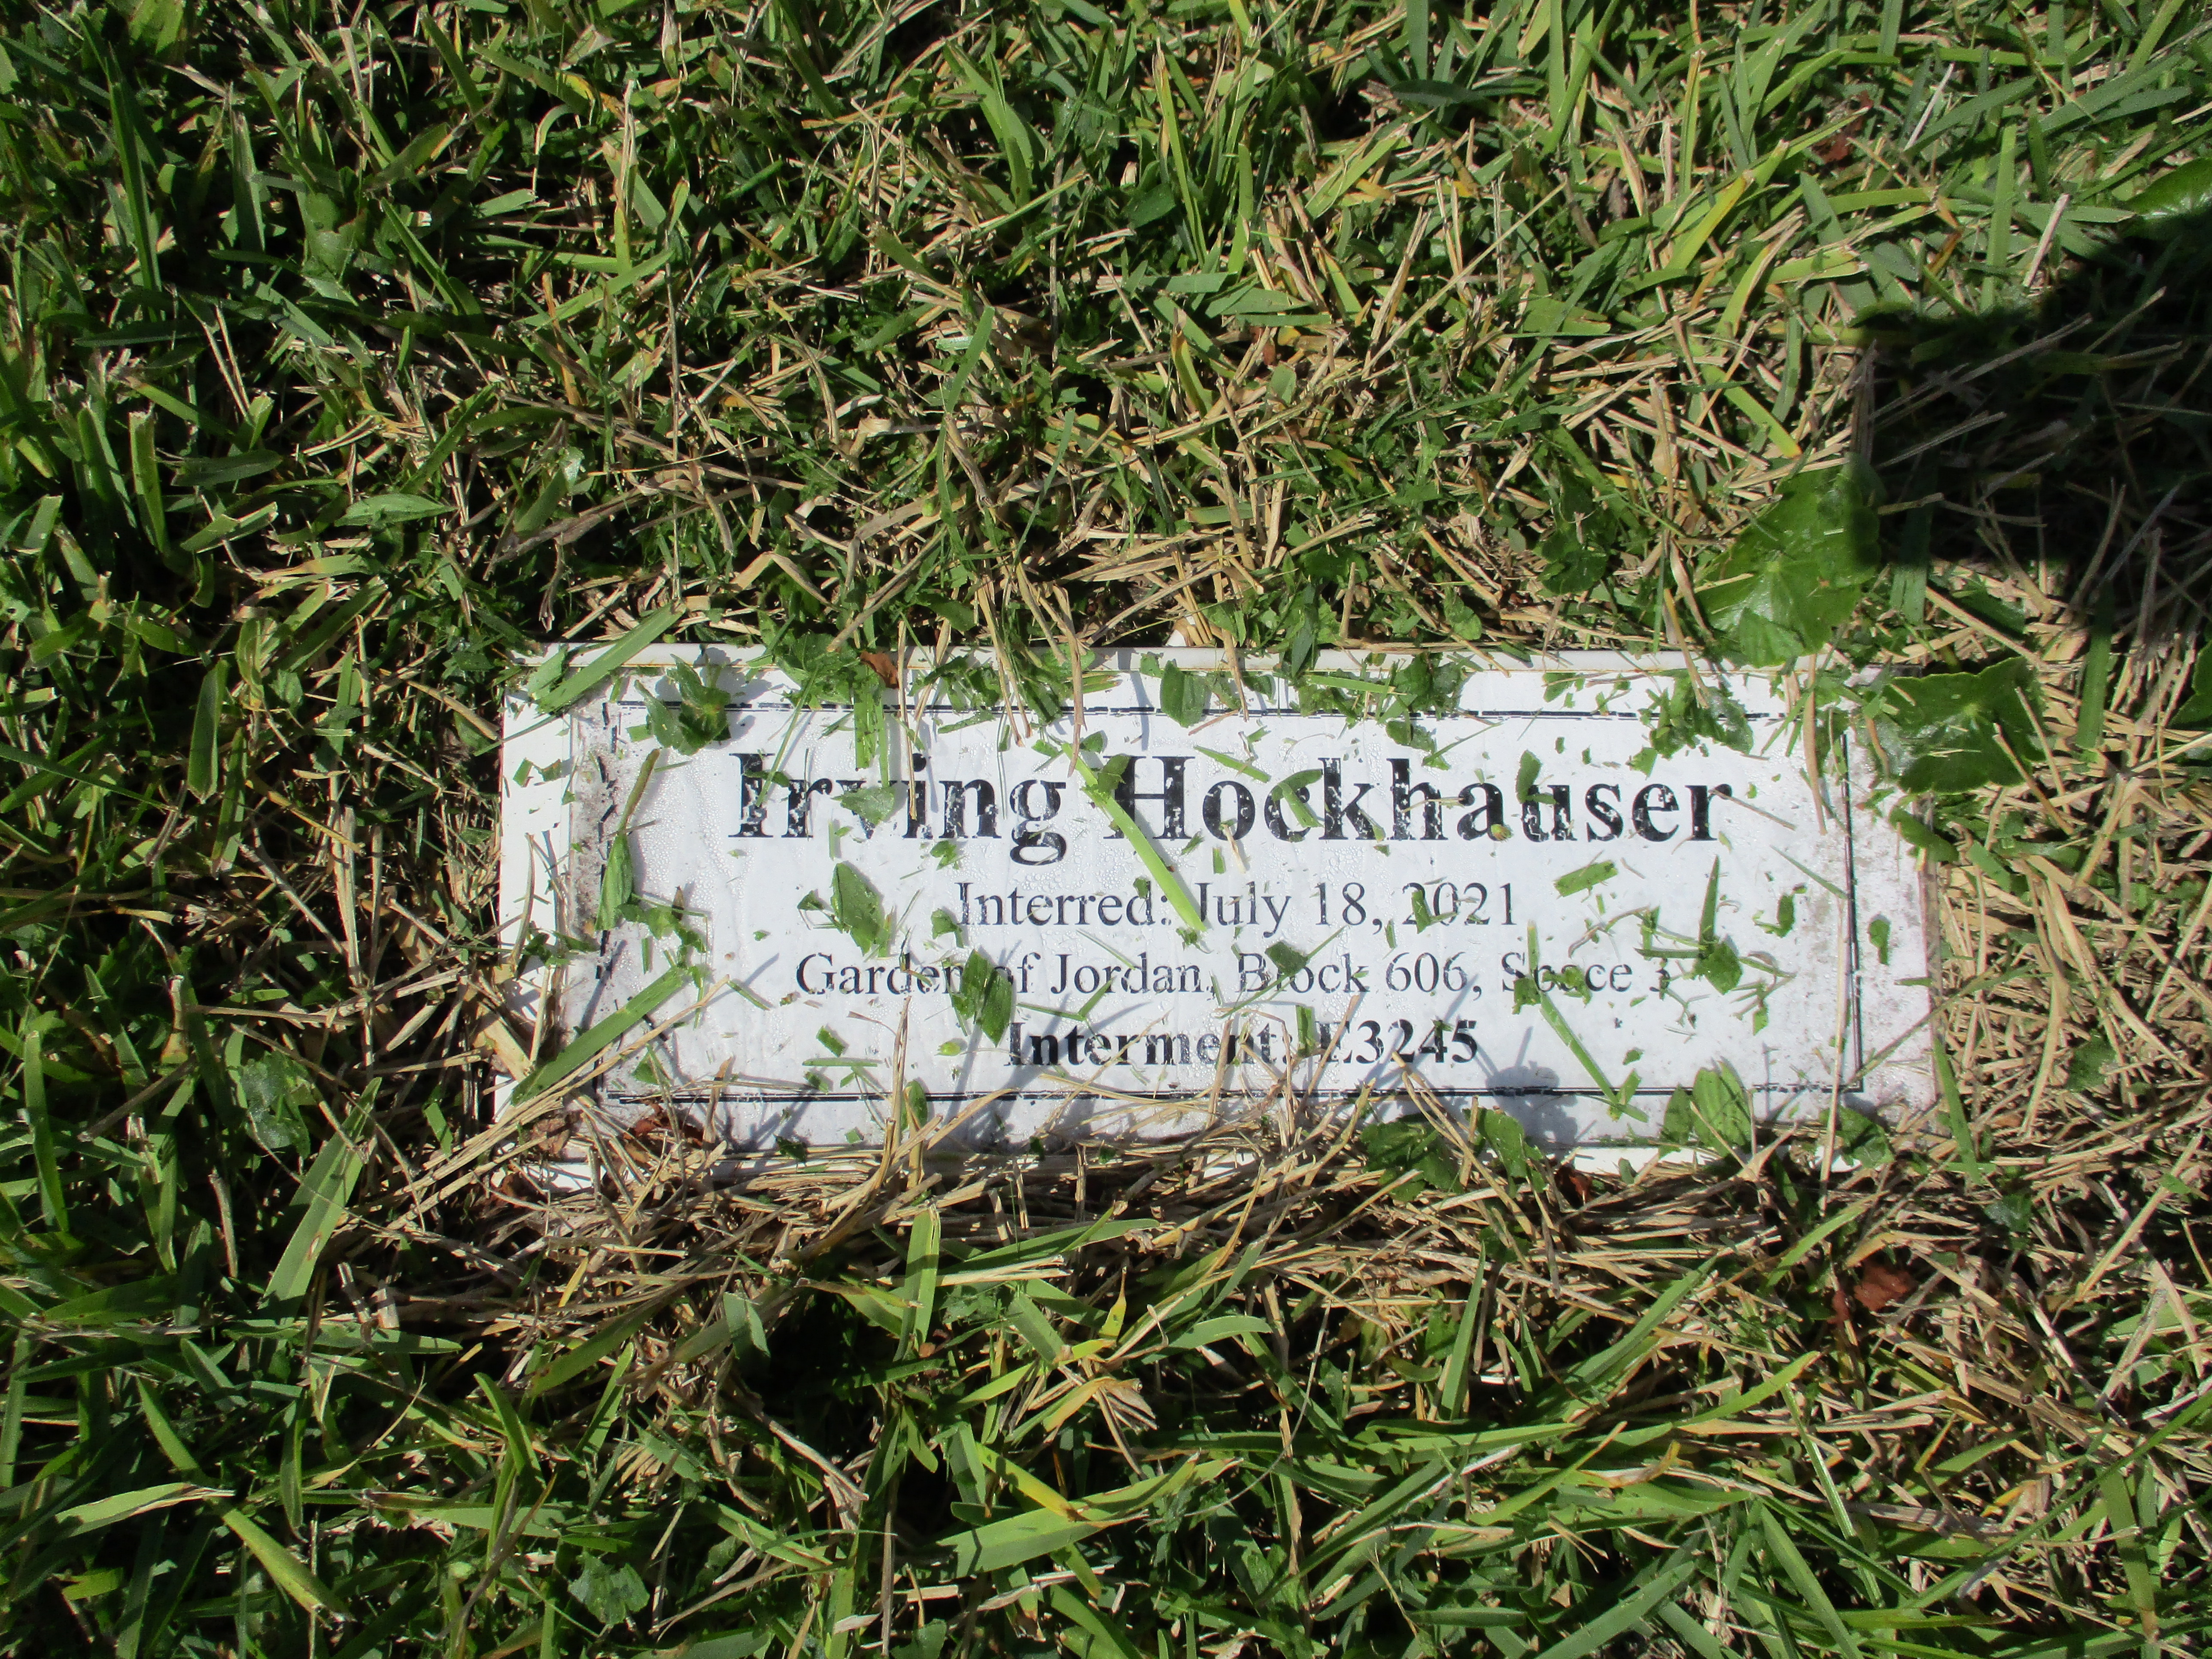 Irving Hockhauser